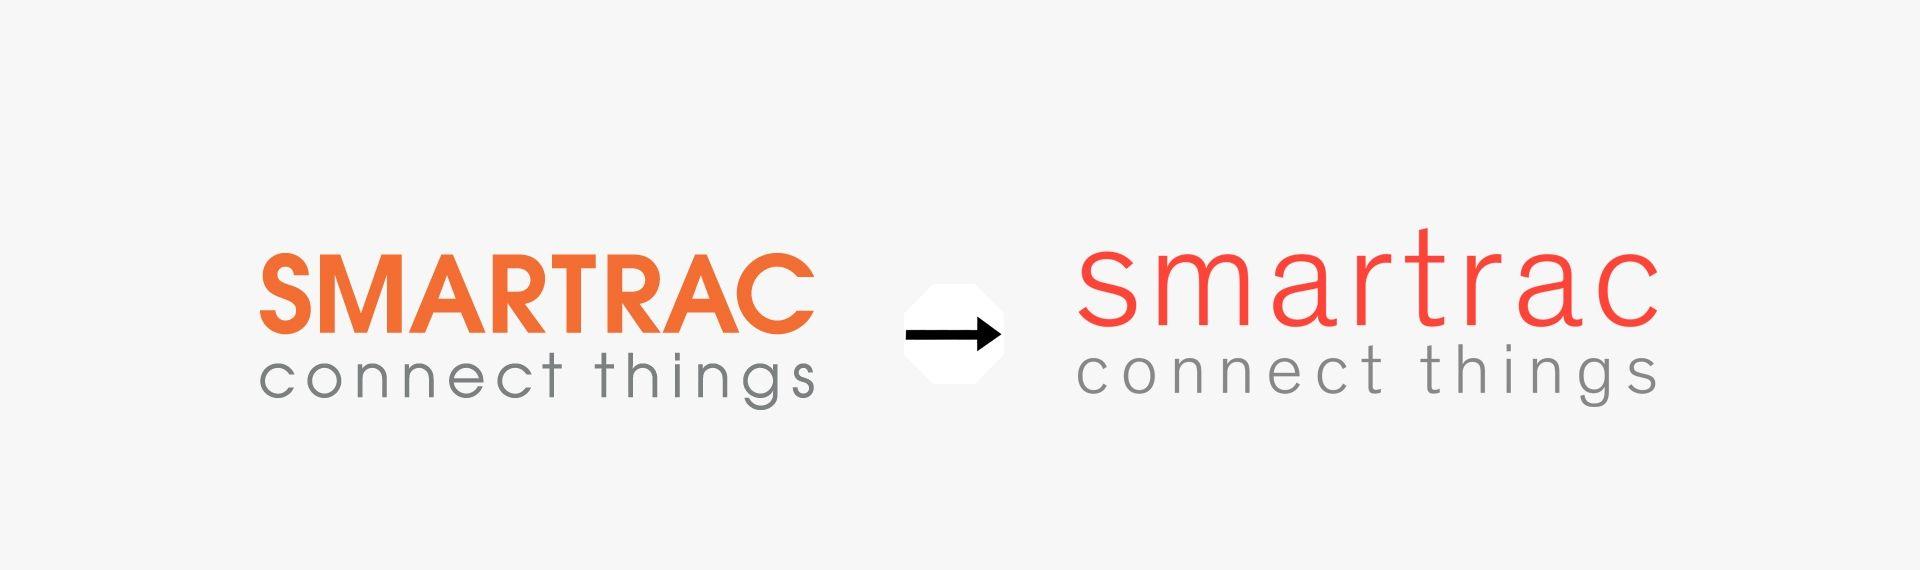 Orange Corporate Logo - Change depicted: Smartrac's New Logo and Corporate Design